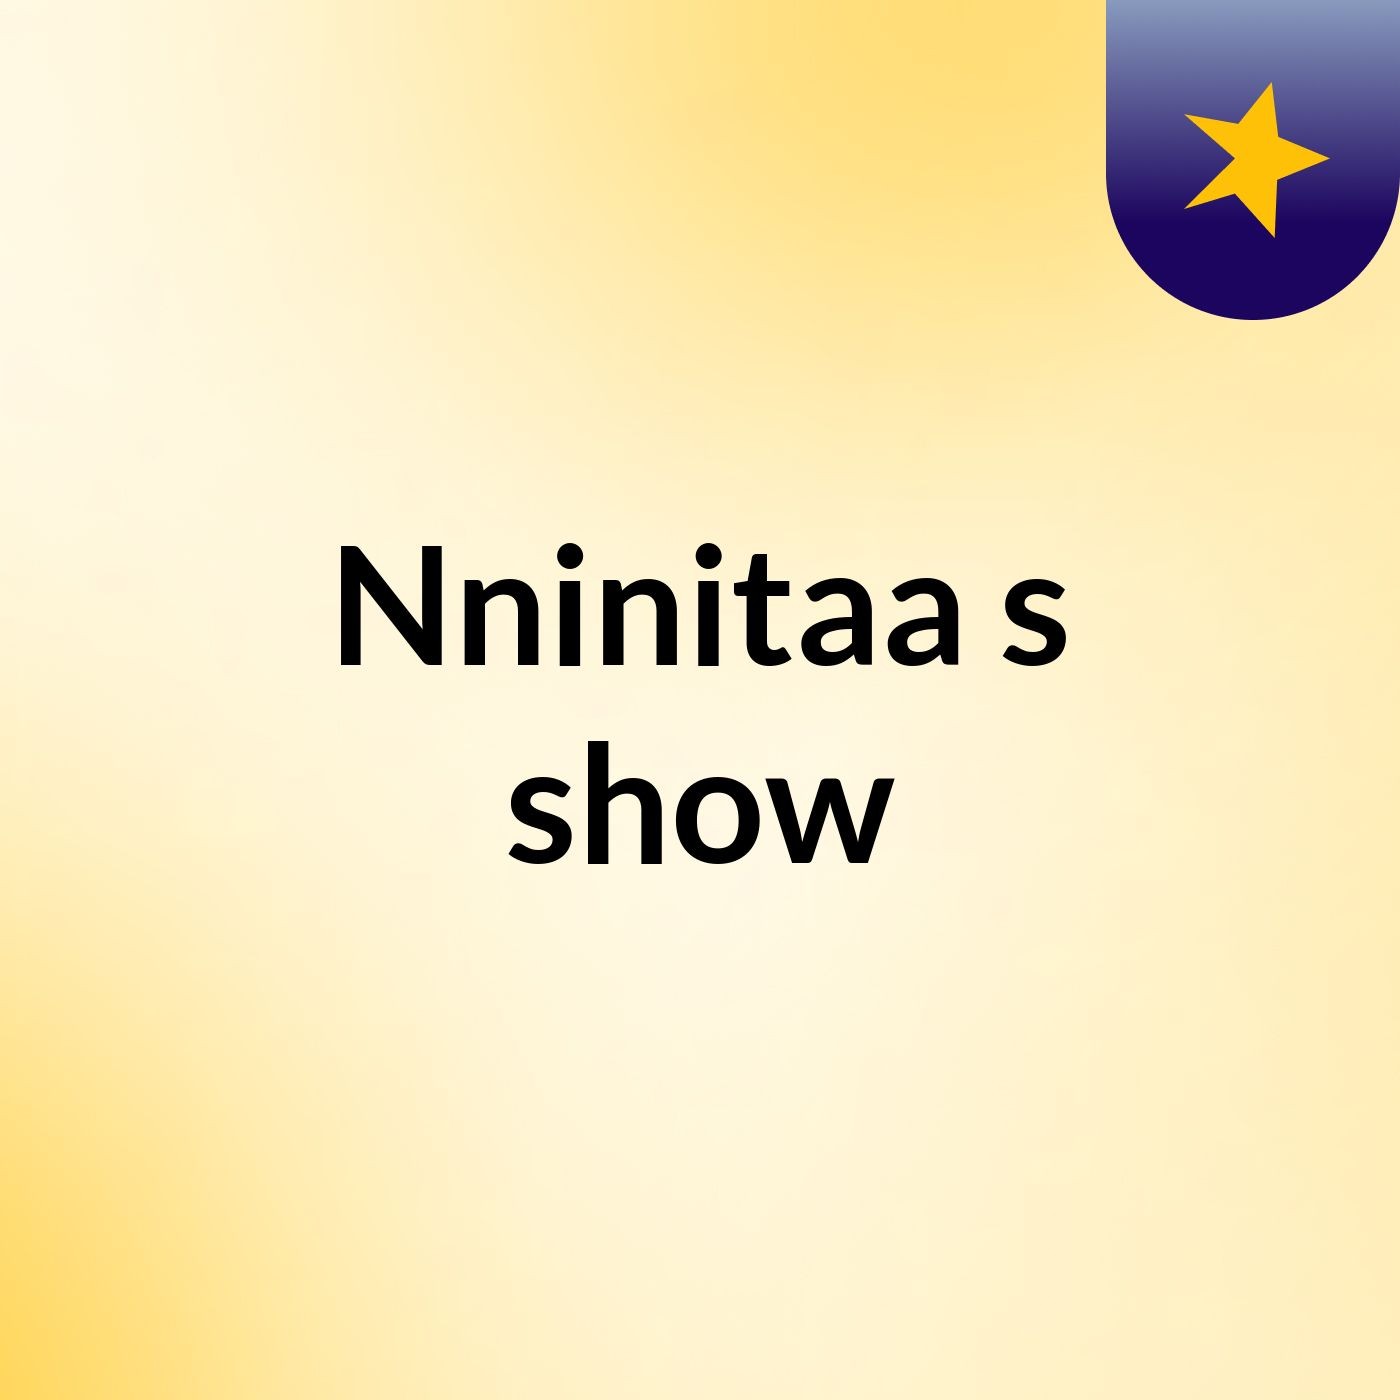 Nninitaa's show